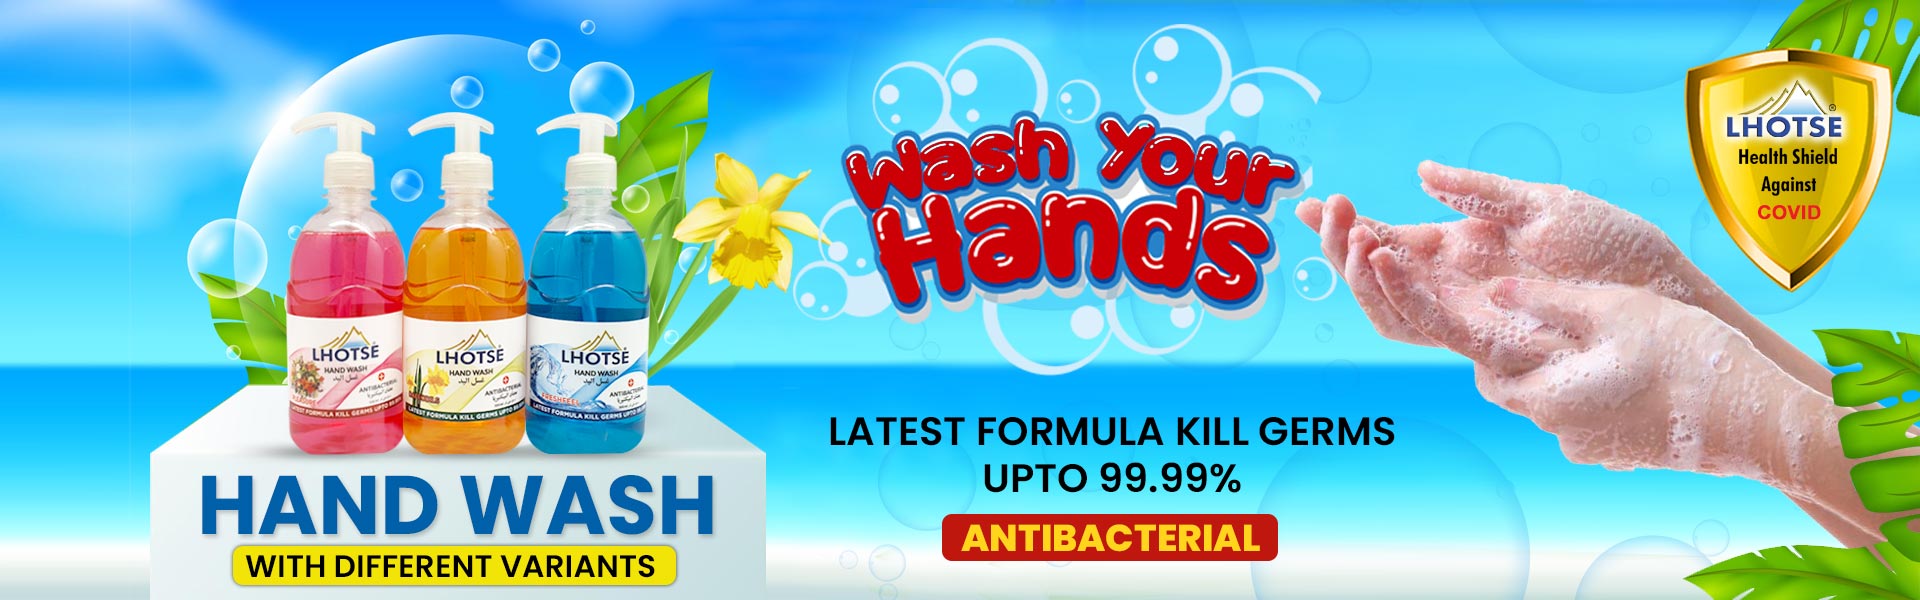 Lhotse_HandwashBanner